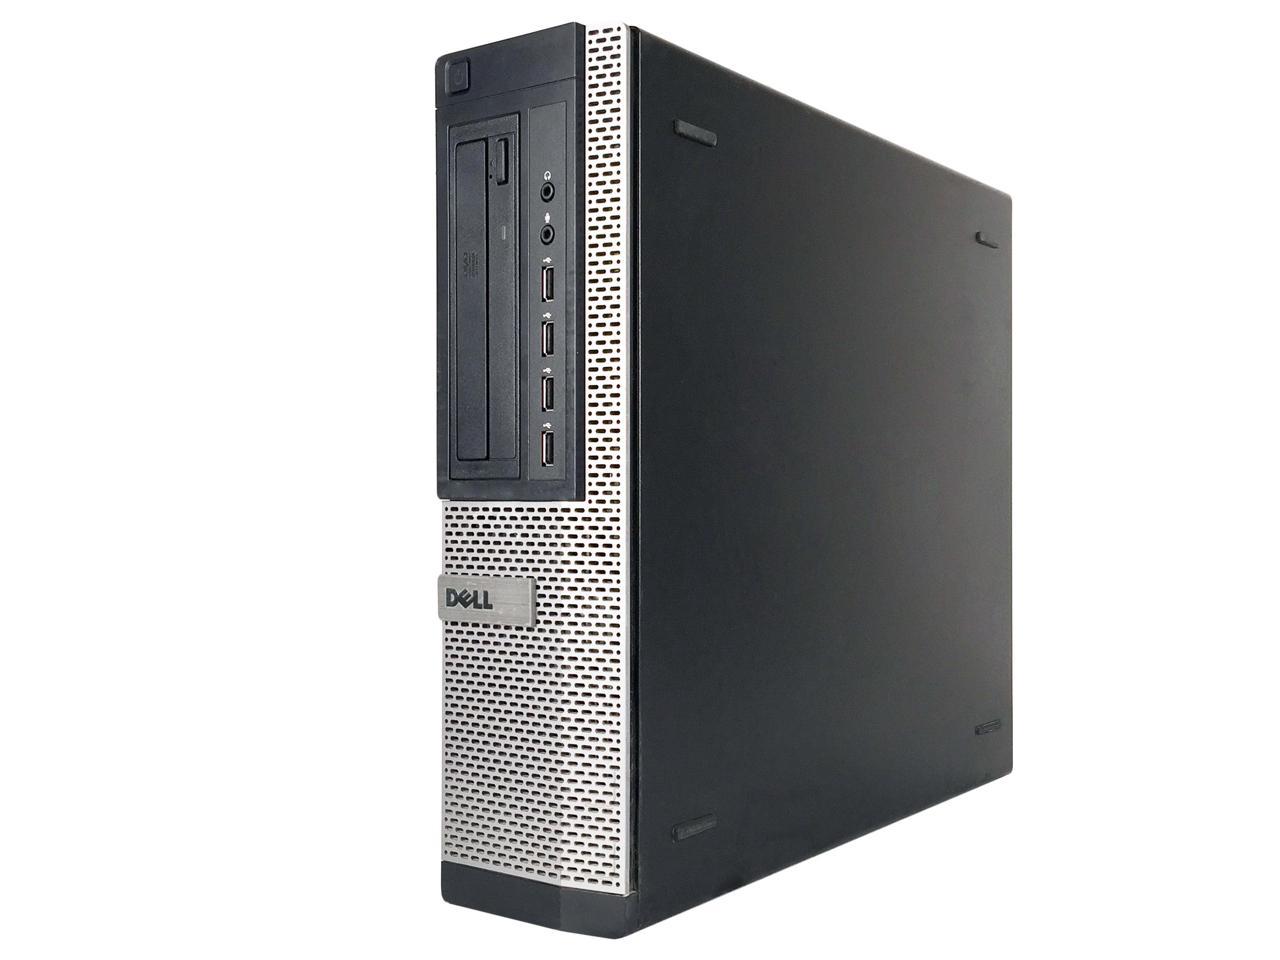 Refurbished Dell Grade A OptiPlex 990 Desktop Computer, Intel Core I5-2500 (3.3 GHz), 8G DDR3, 240G SSD, DVD, Windows 10 Home 64-bit (English/Spanish), 1 Year Warranty